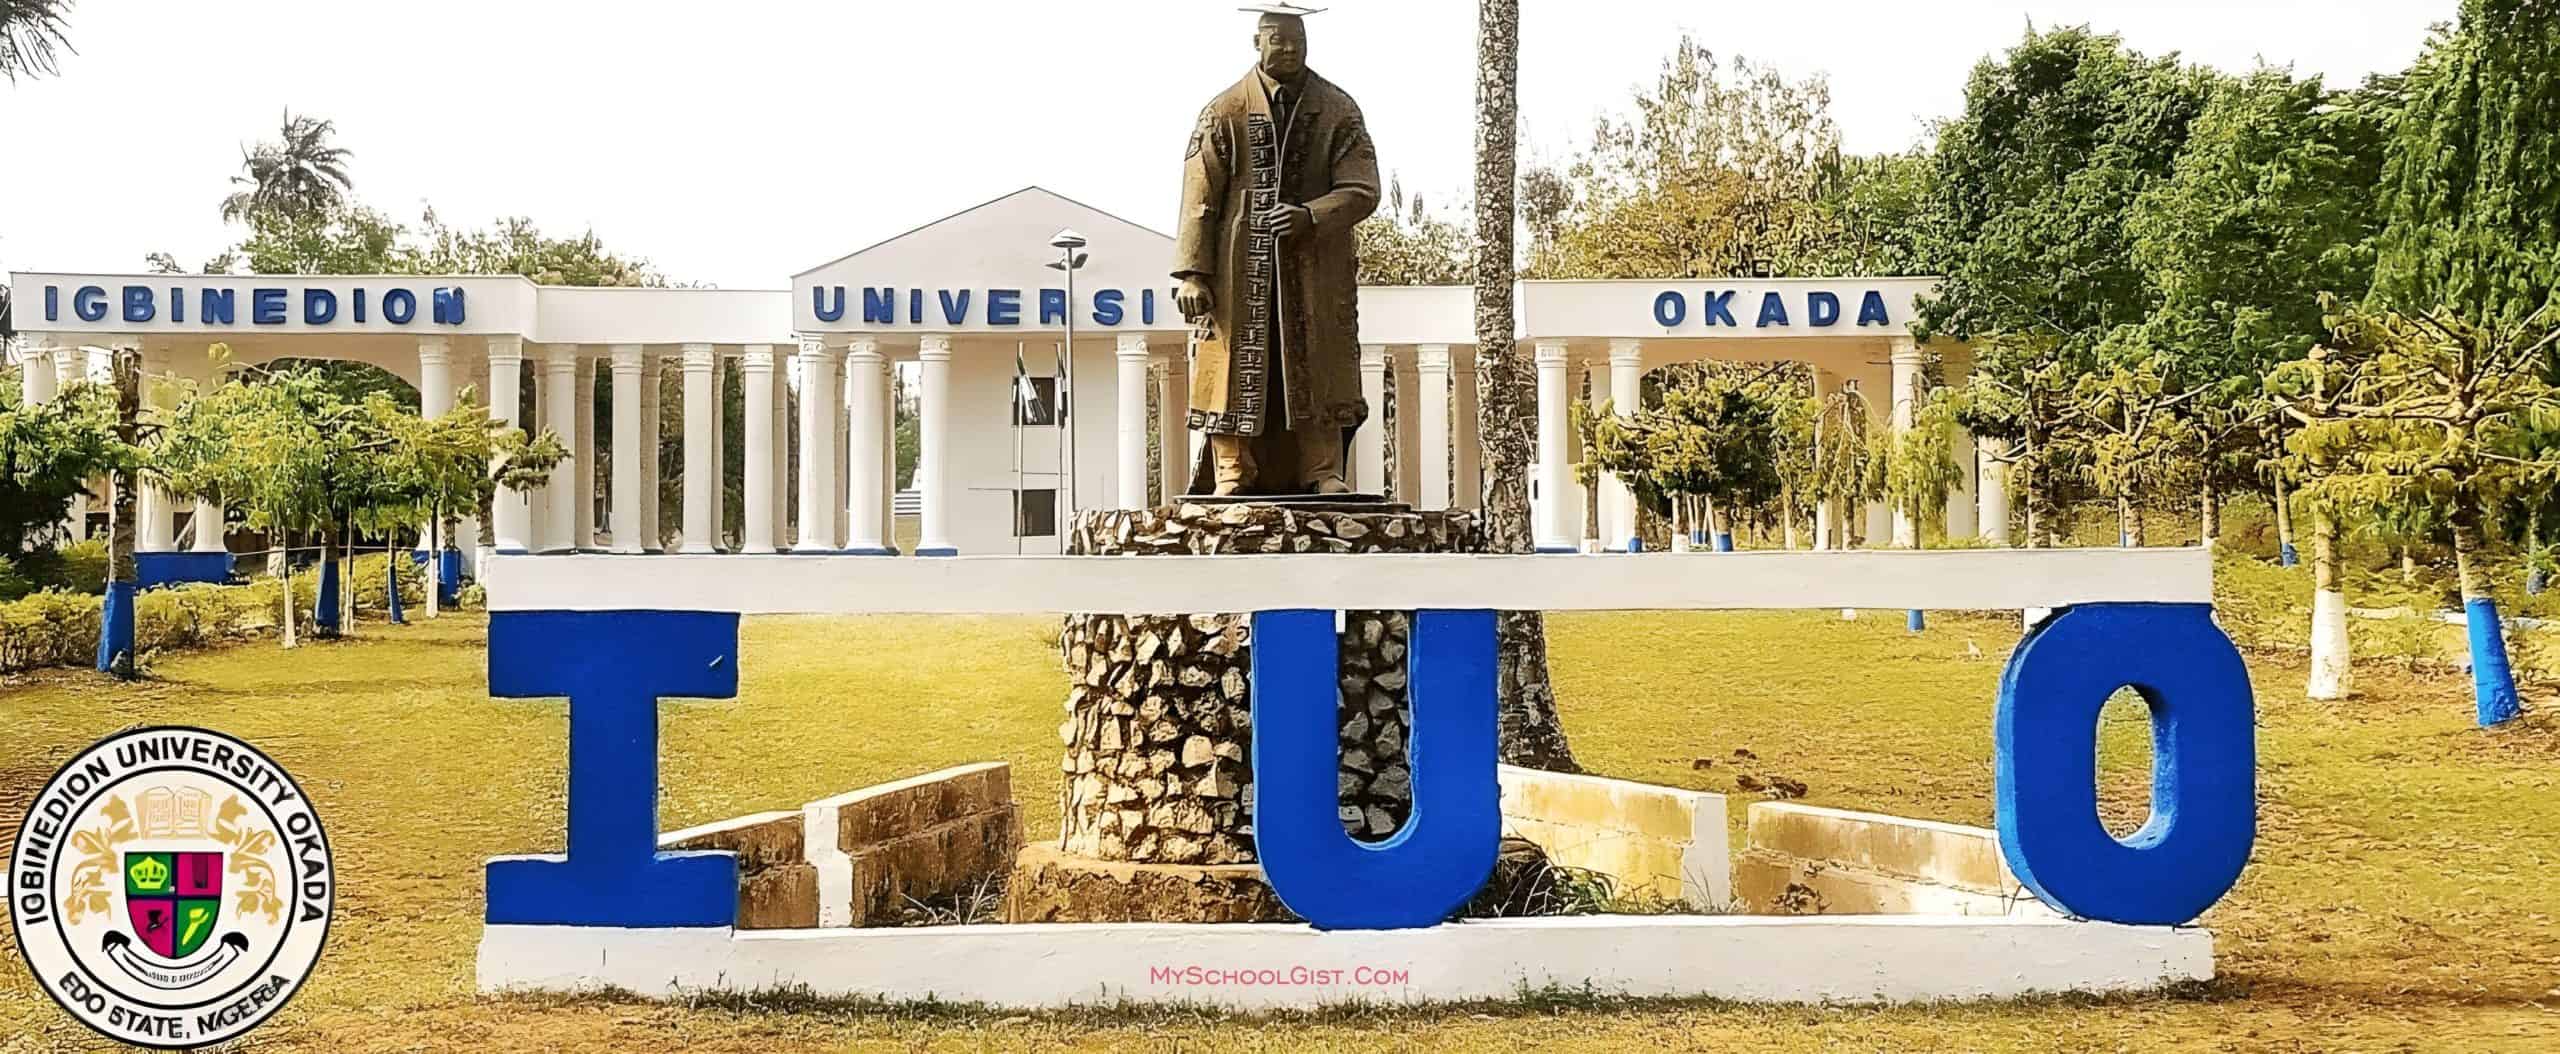 Igbinedion University Marks Its 25th Anniversary